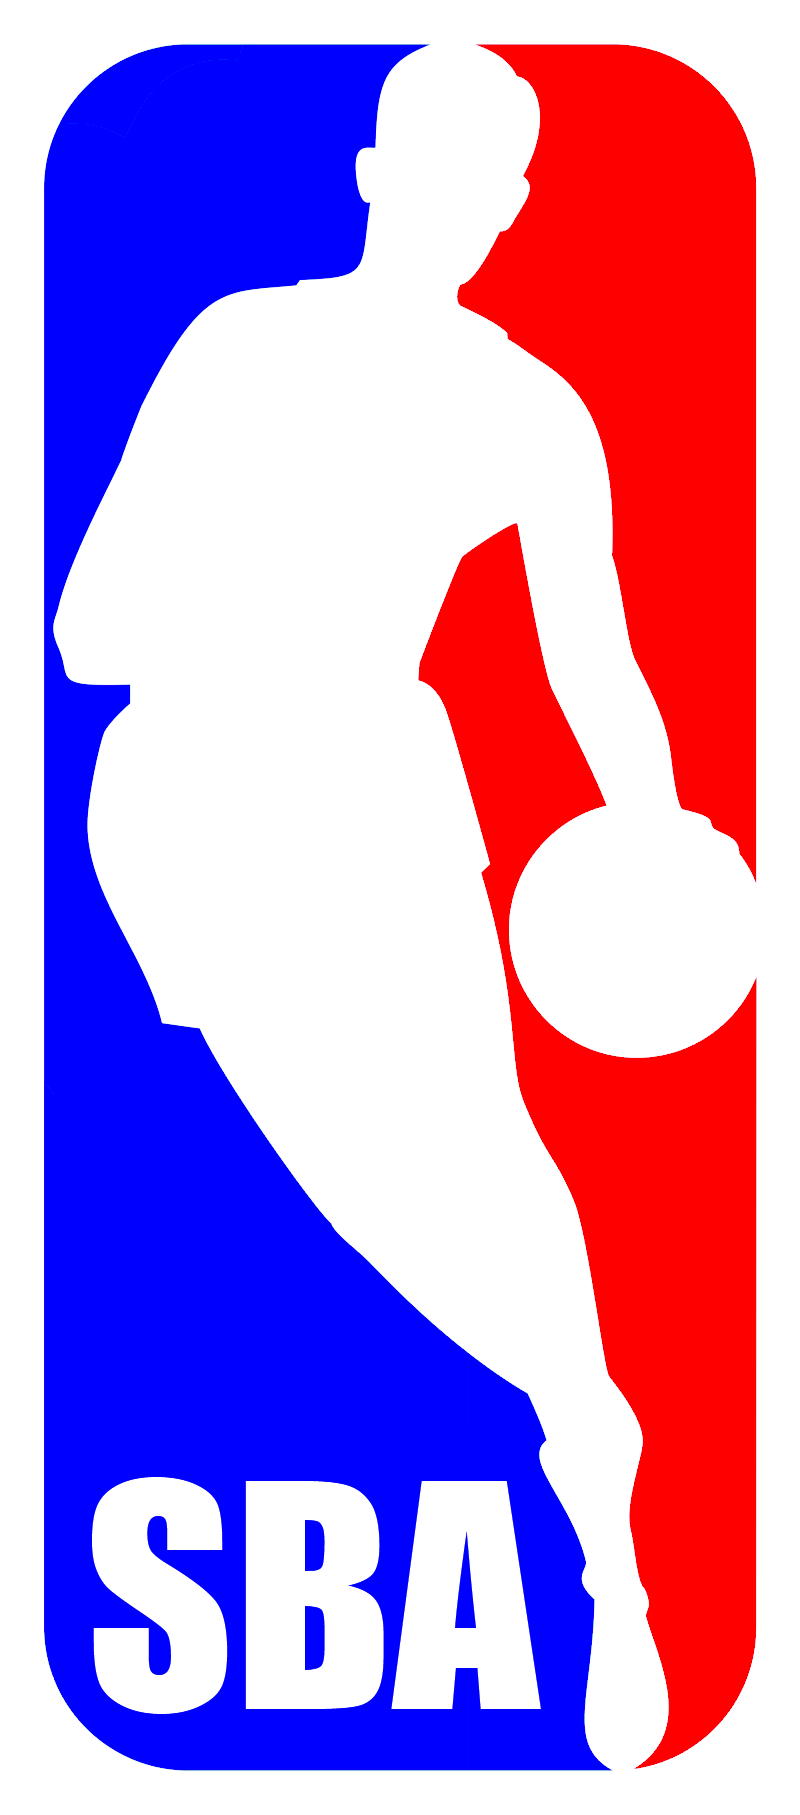 SBA Logo - Image - SBA logo.png | SBA Wiki | FANDOM powered by Wikia